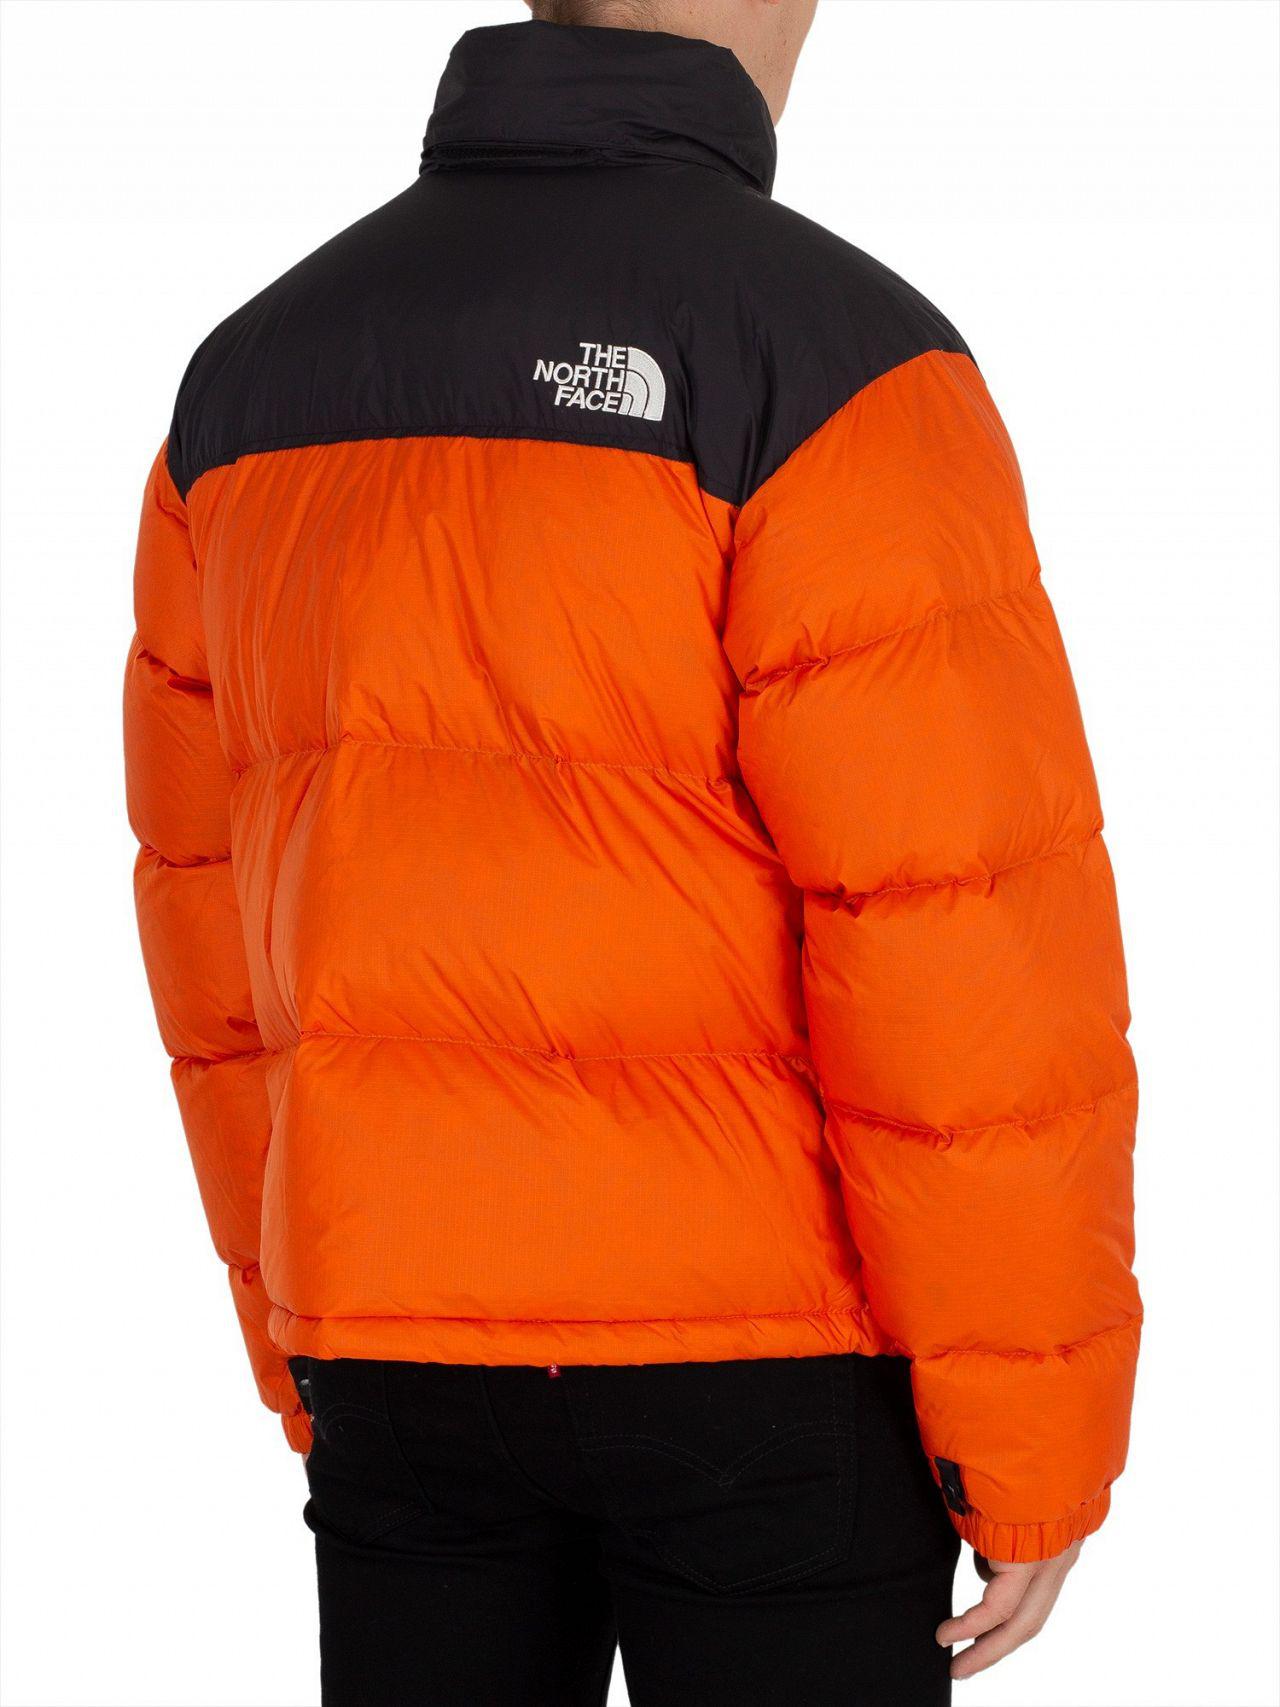 The North Face Synthetic M 1996 Rto Nptse Jacket in Orange - Lyst